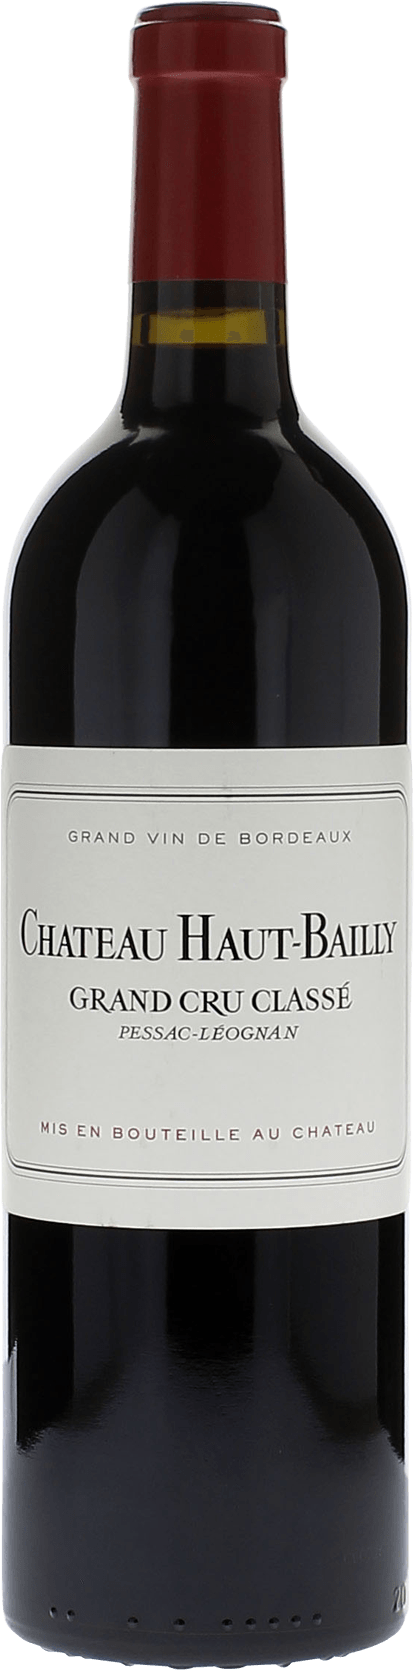 Haut bailly 1992 cru class Pessac-Lognan, Bordeaux rouge